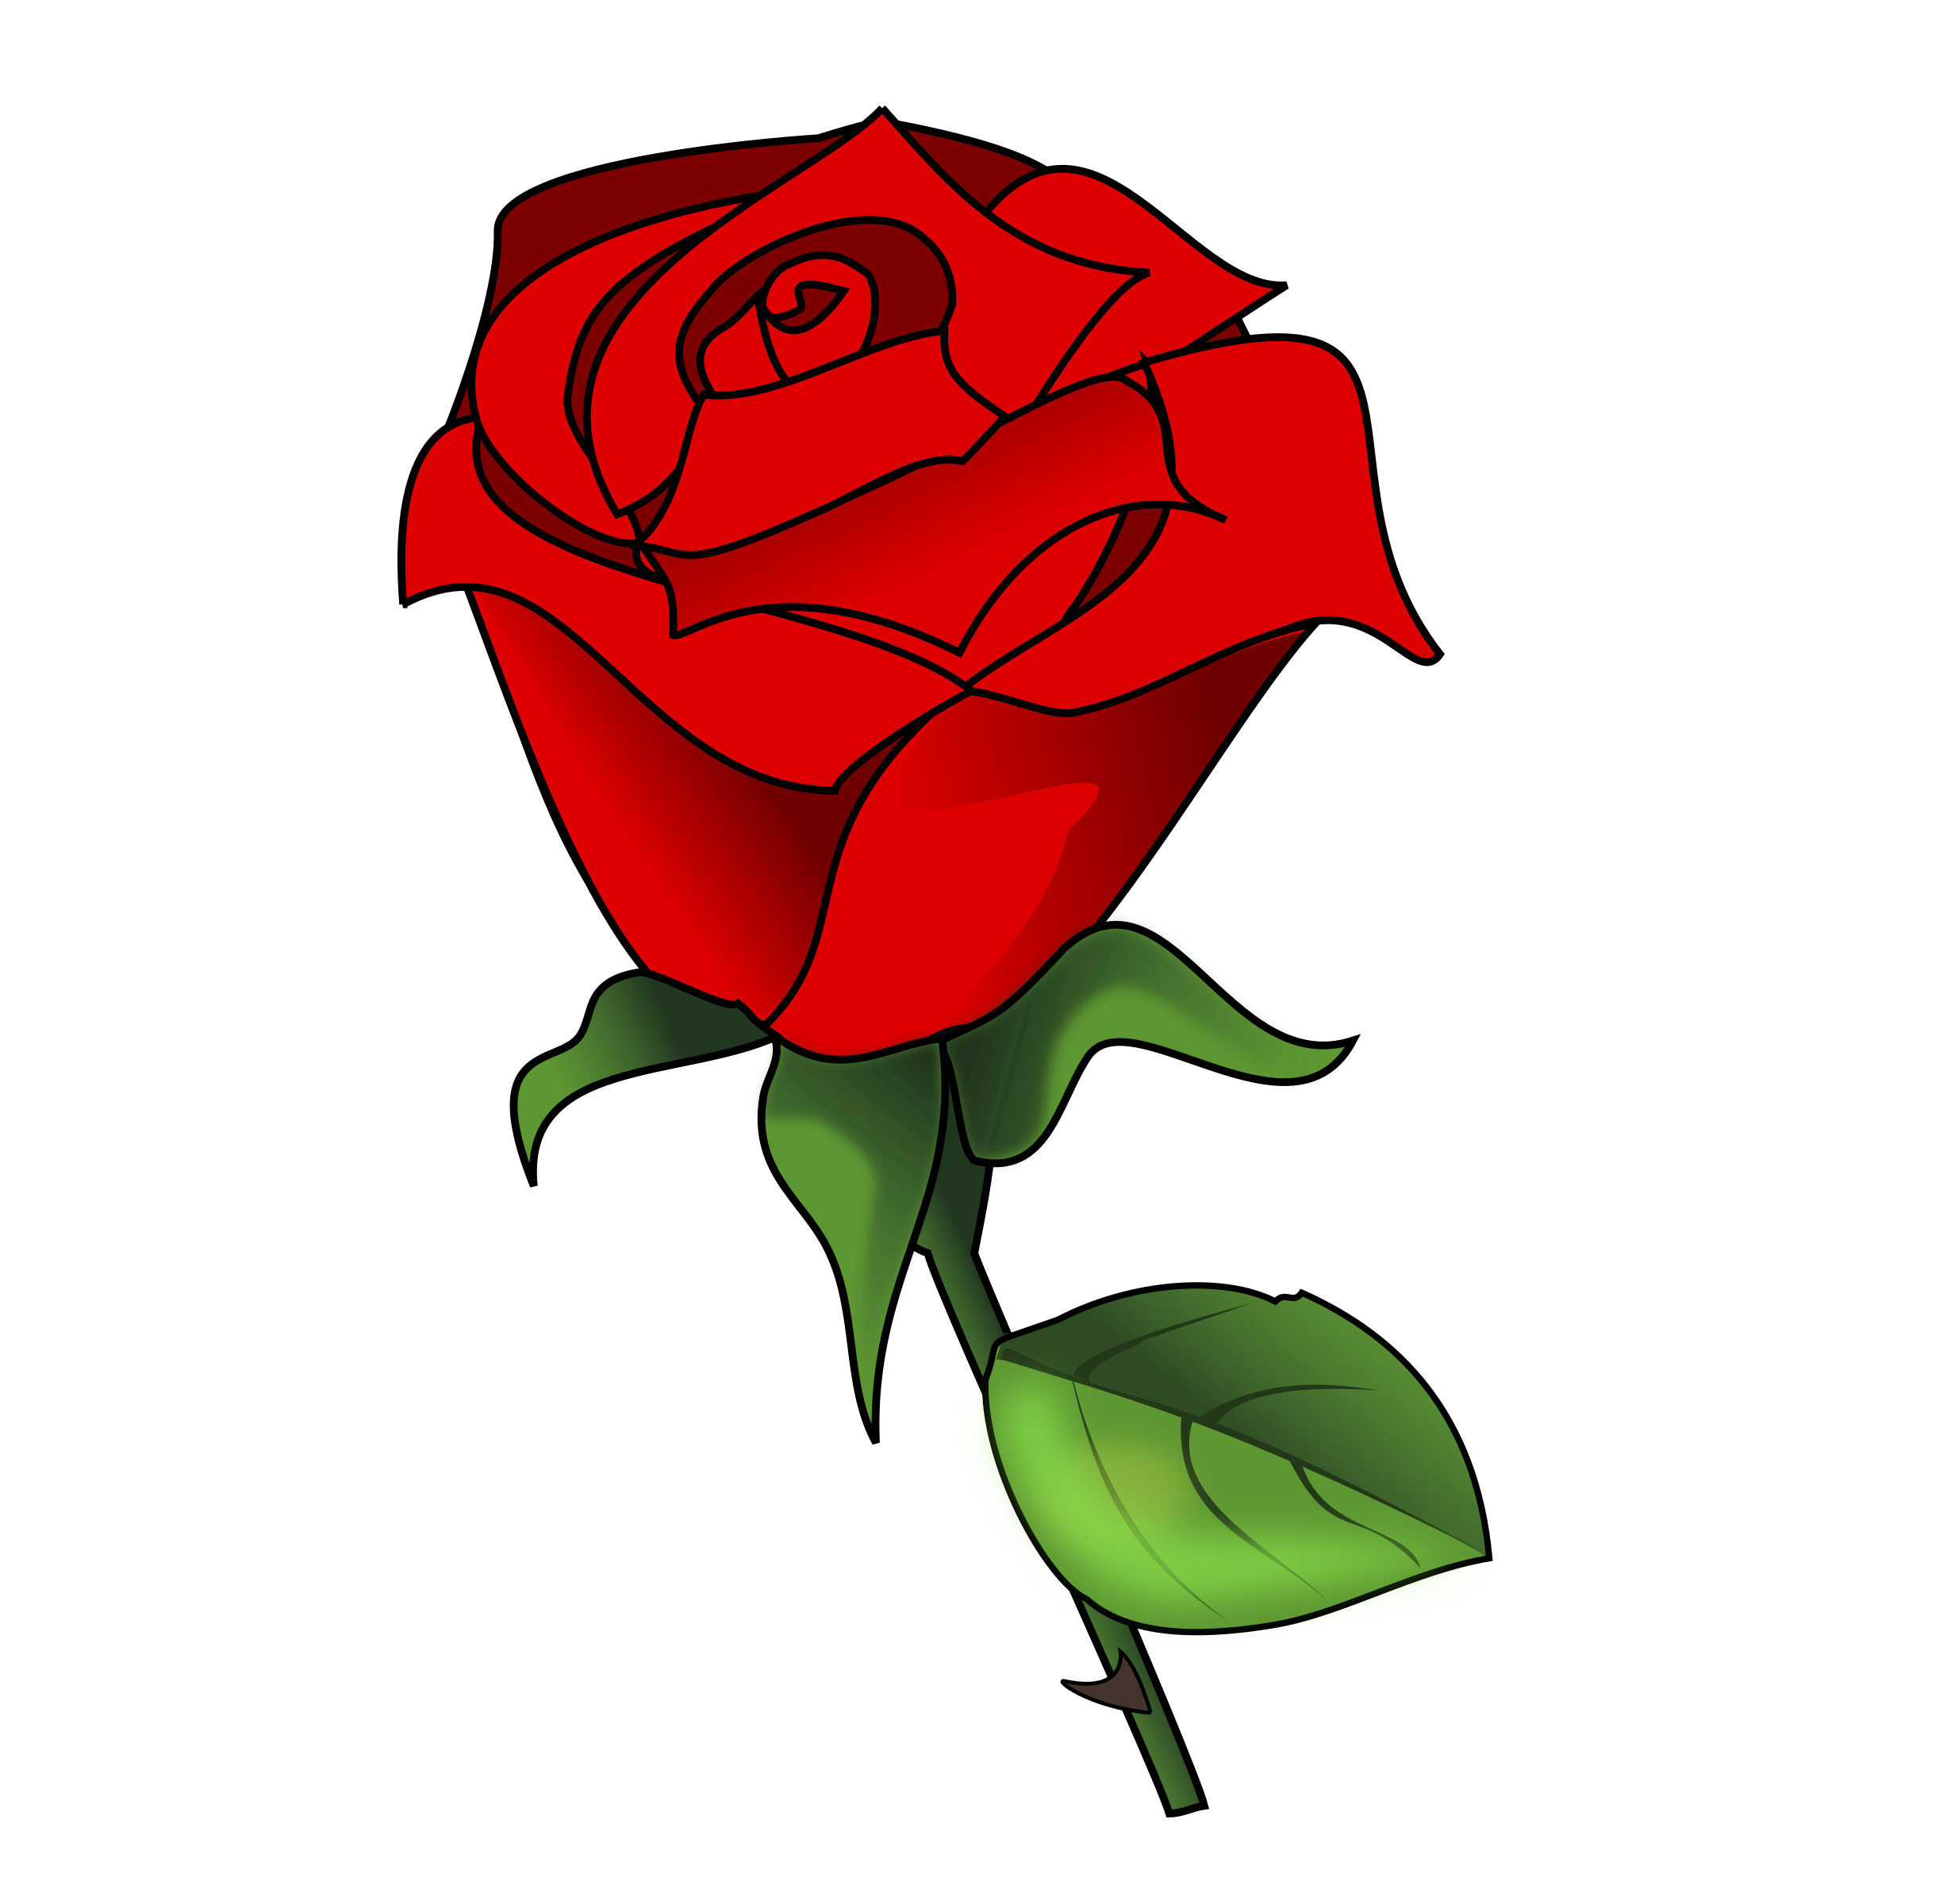 Clipart rose red rose. Bud at getdrawings com